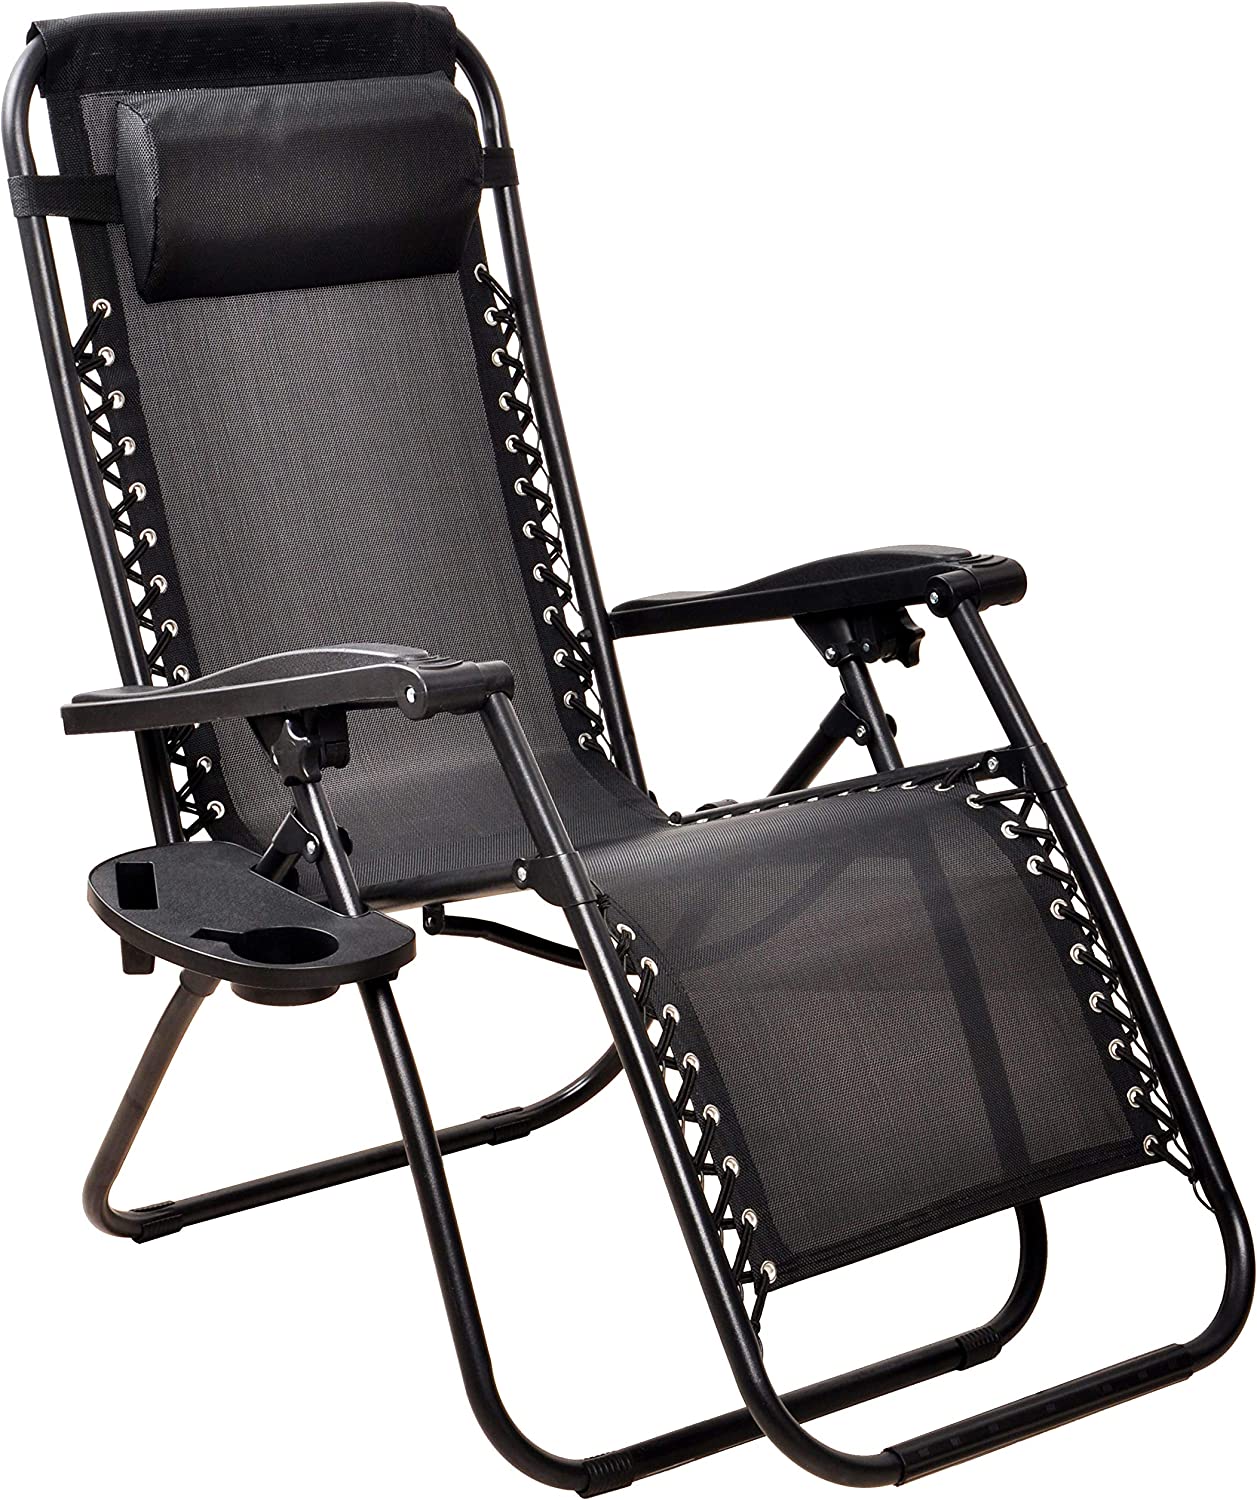 BalanceFrom Foldable Lightweight Zero Gravity Chair